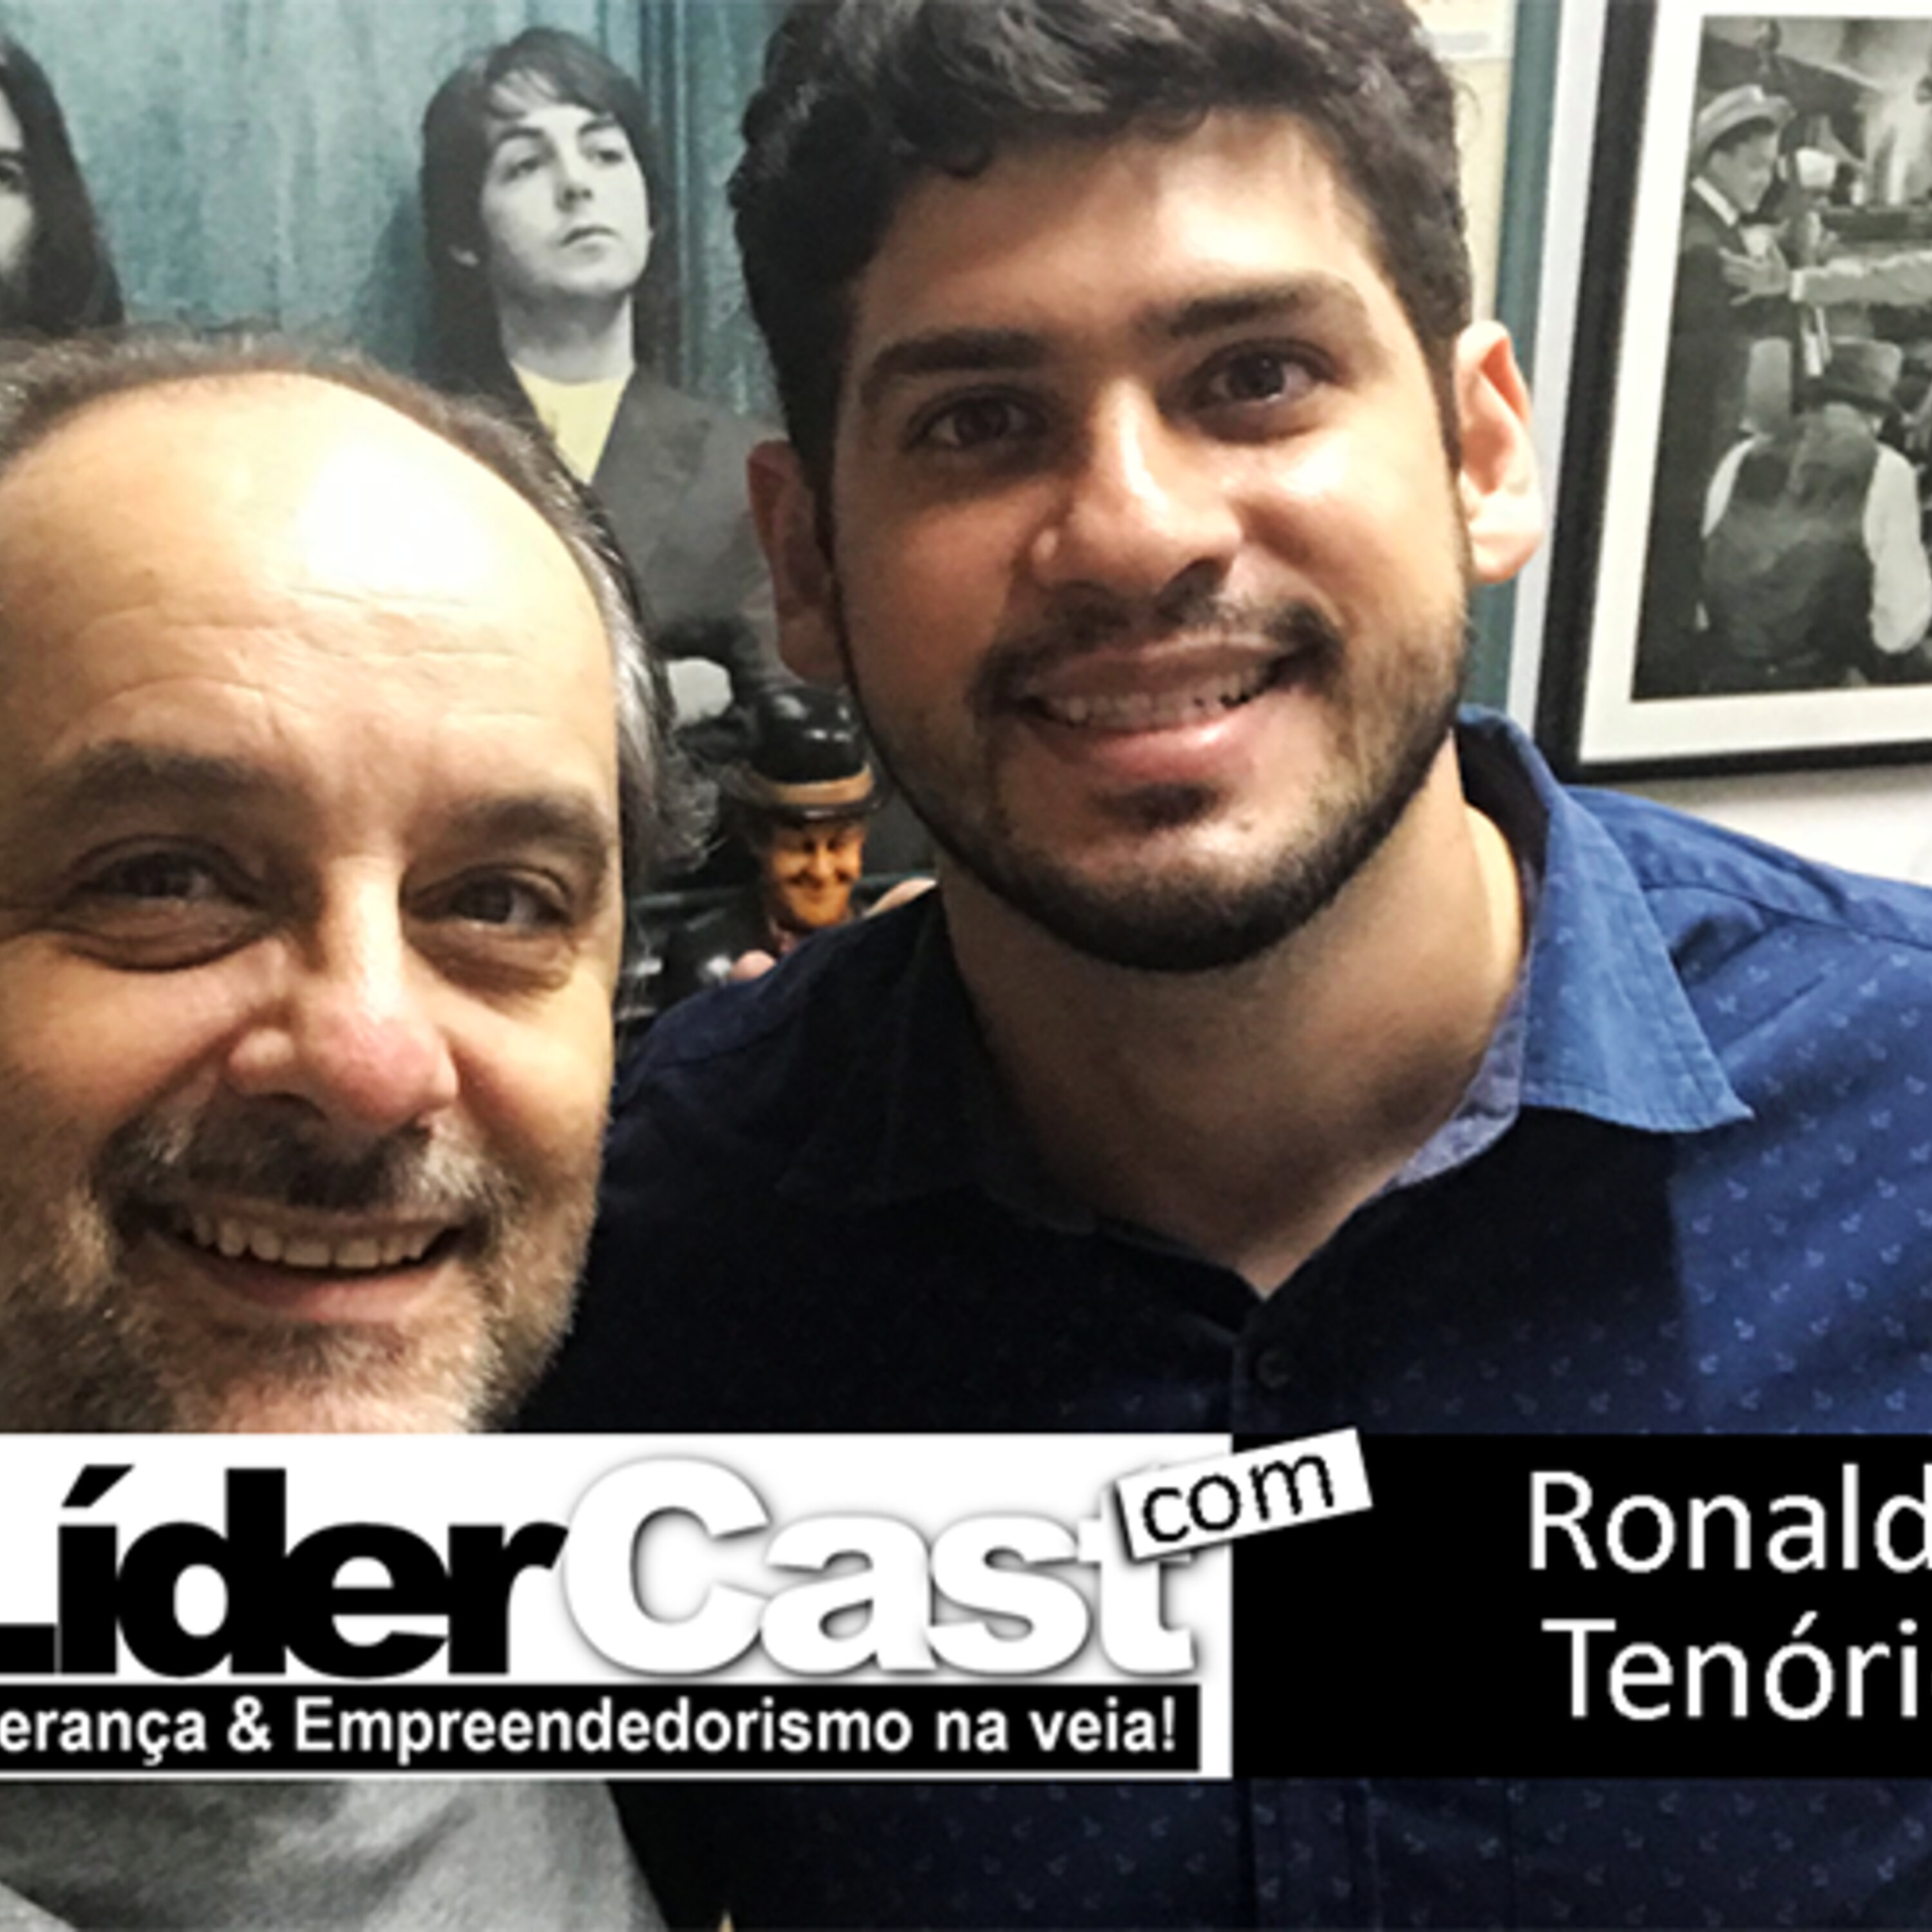 LíderCast 149 – Ronaldo Tenório